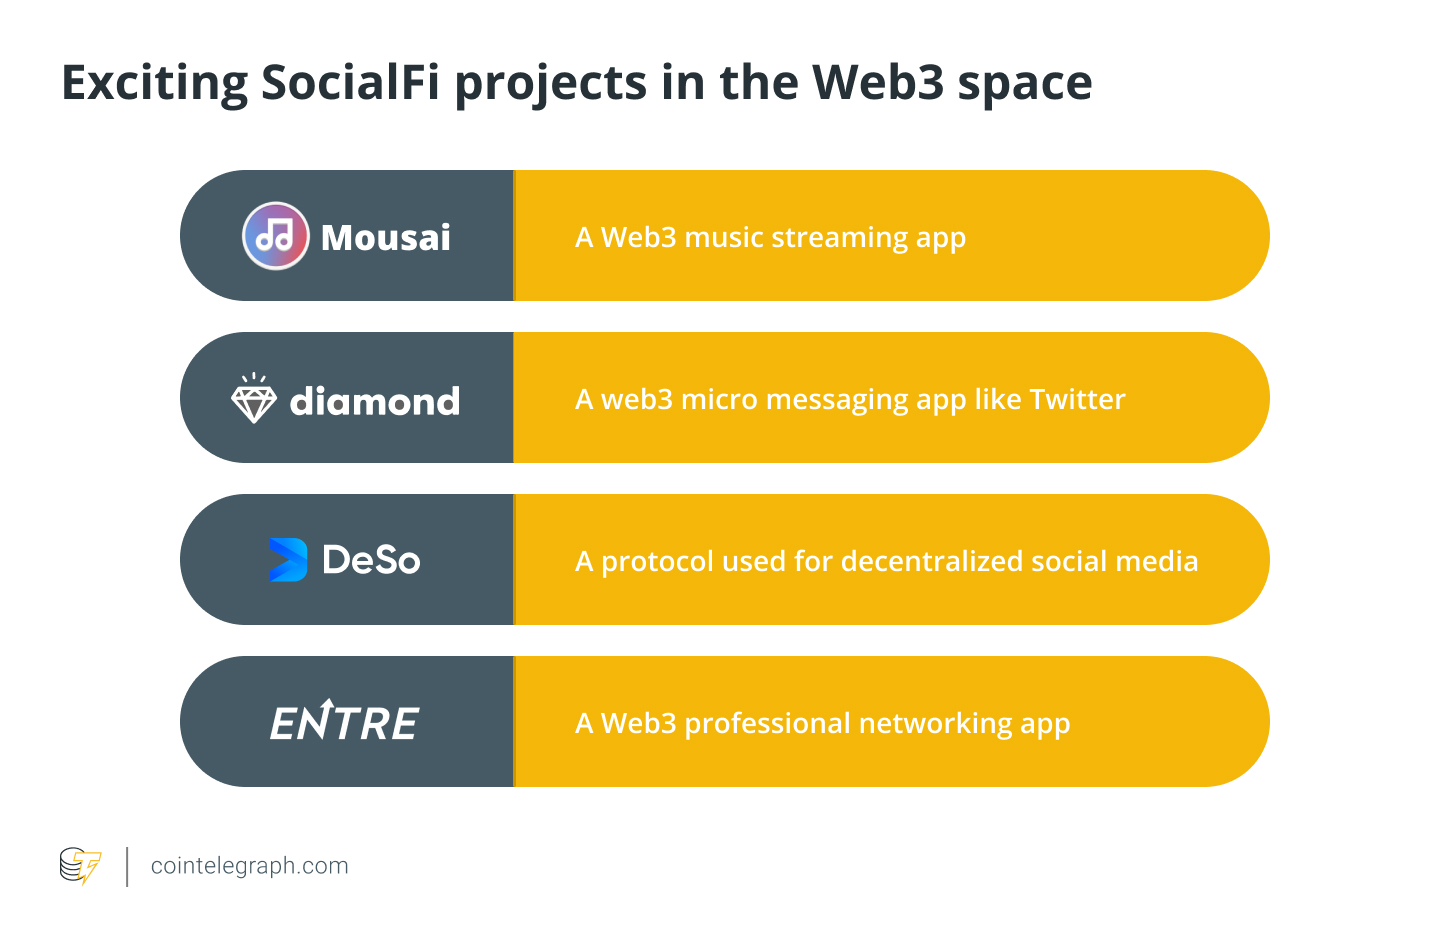 socialfi projects in web3 space